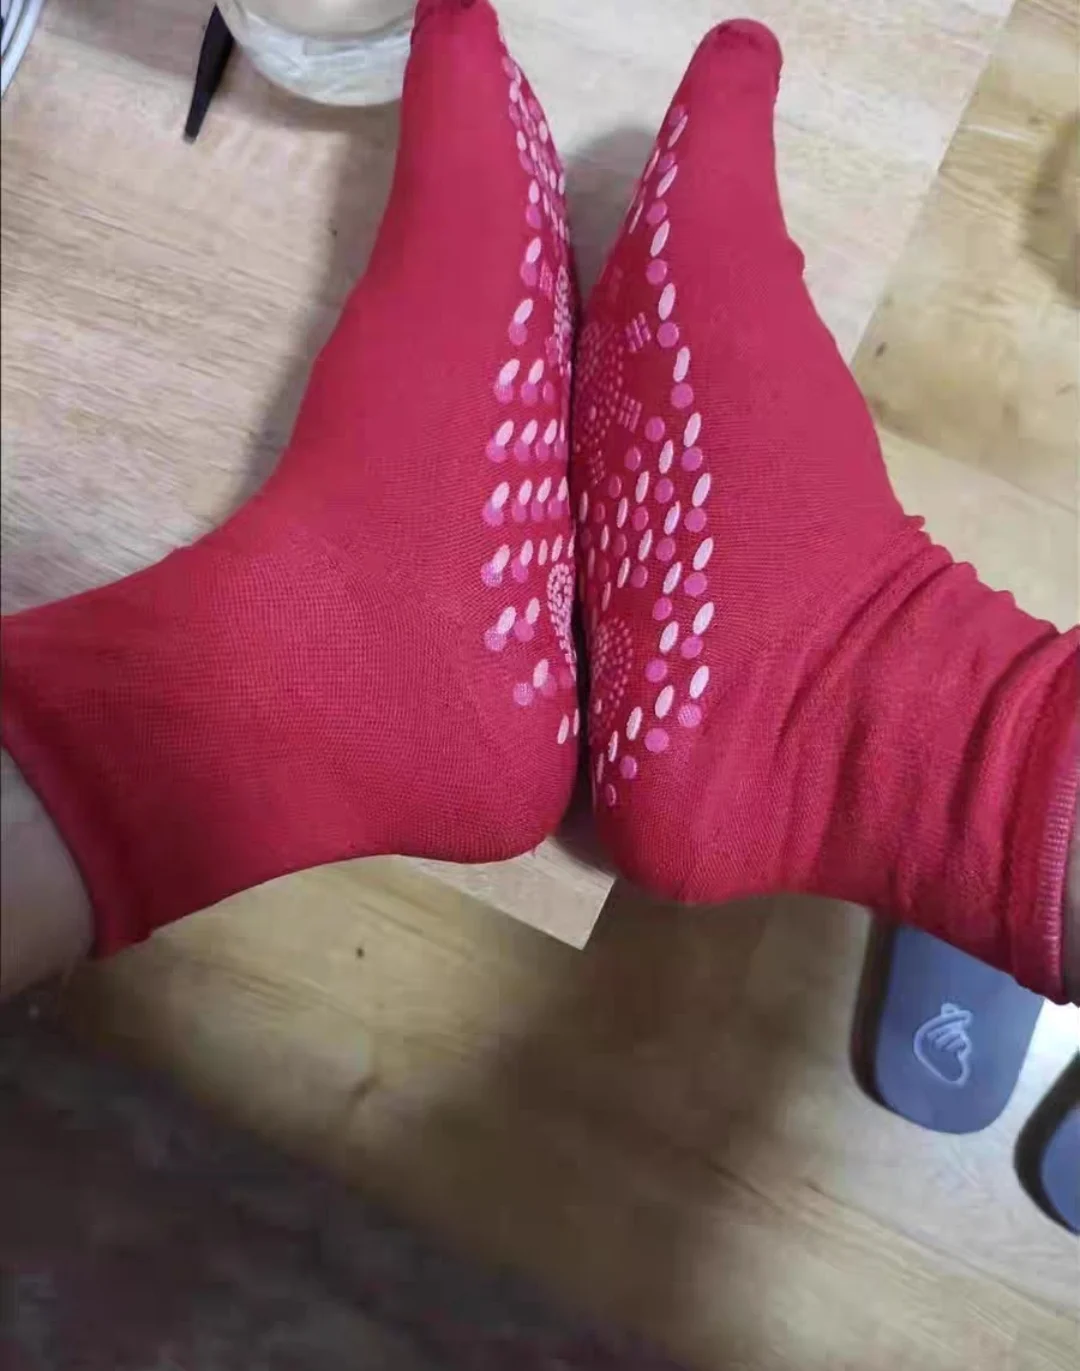 Tourmaline acupressure self-heating shaping socks